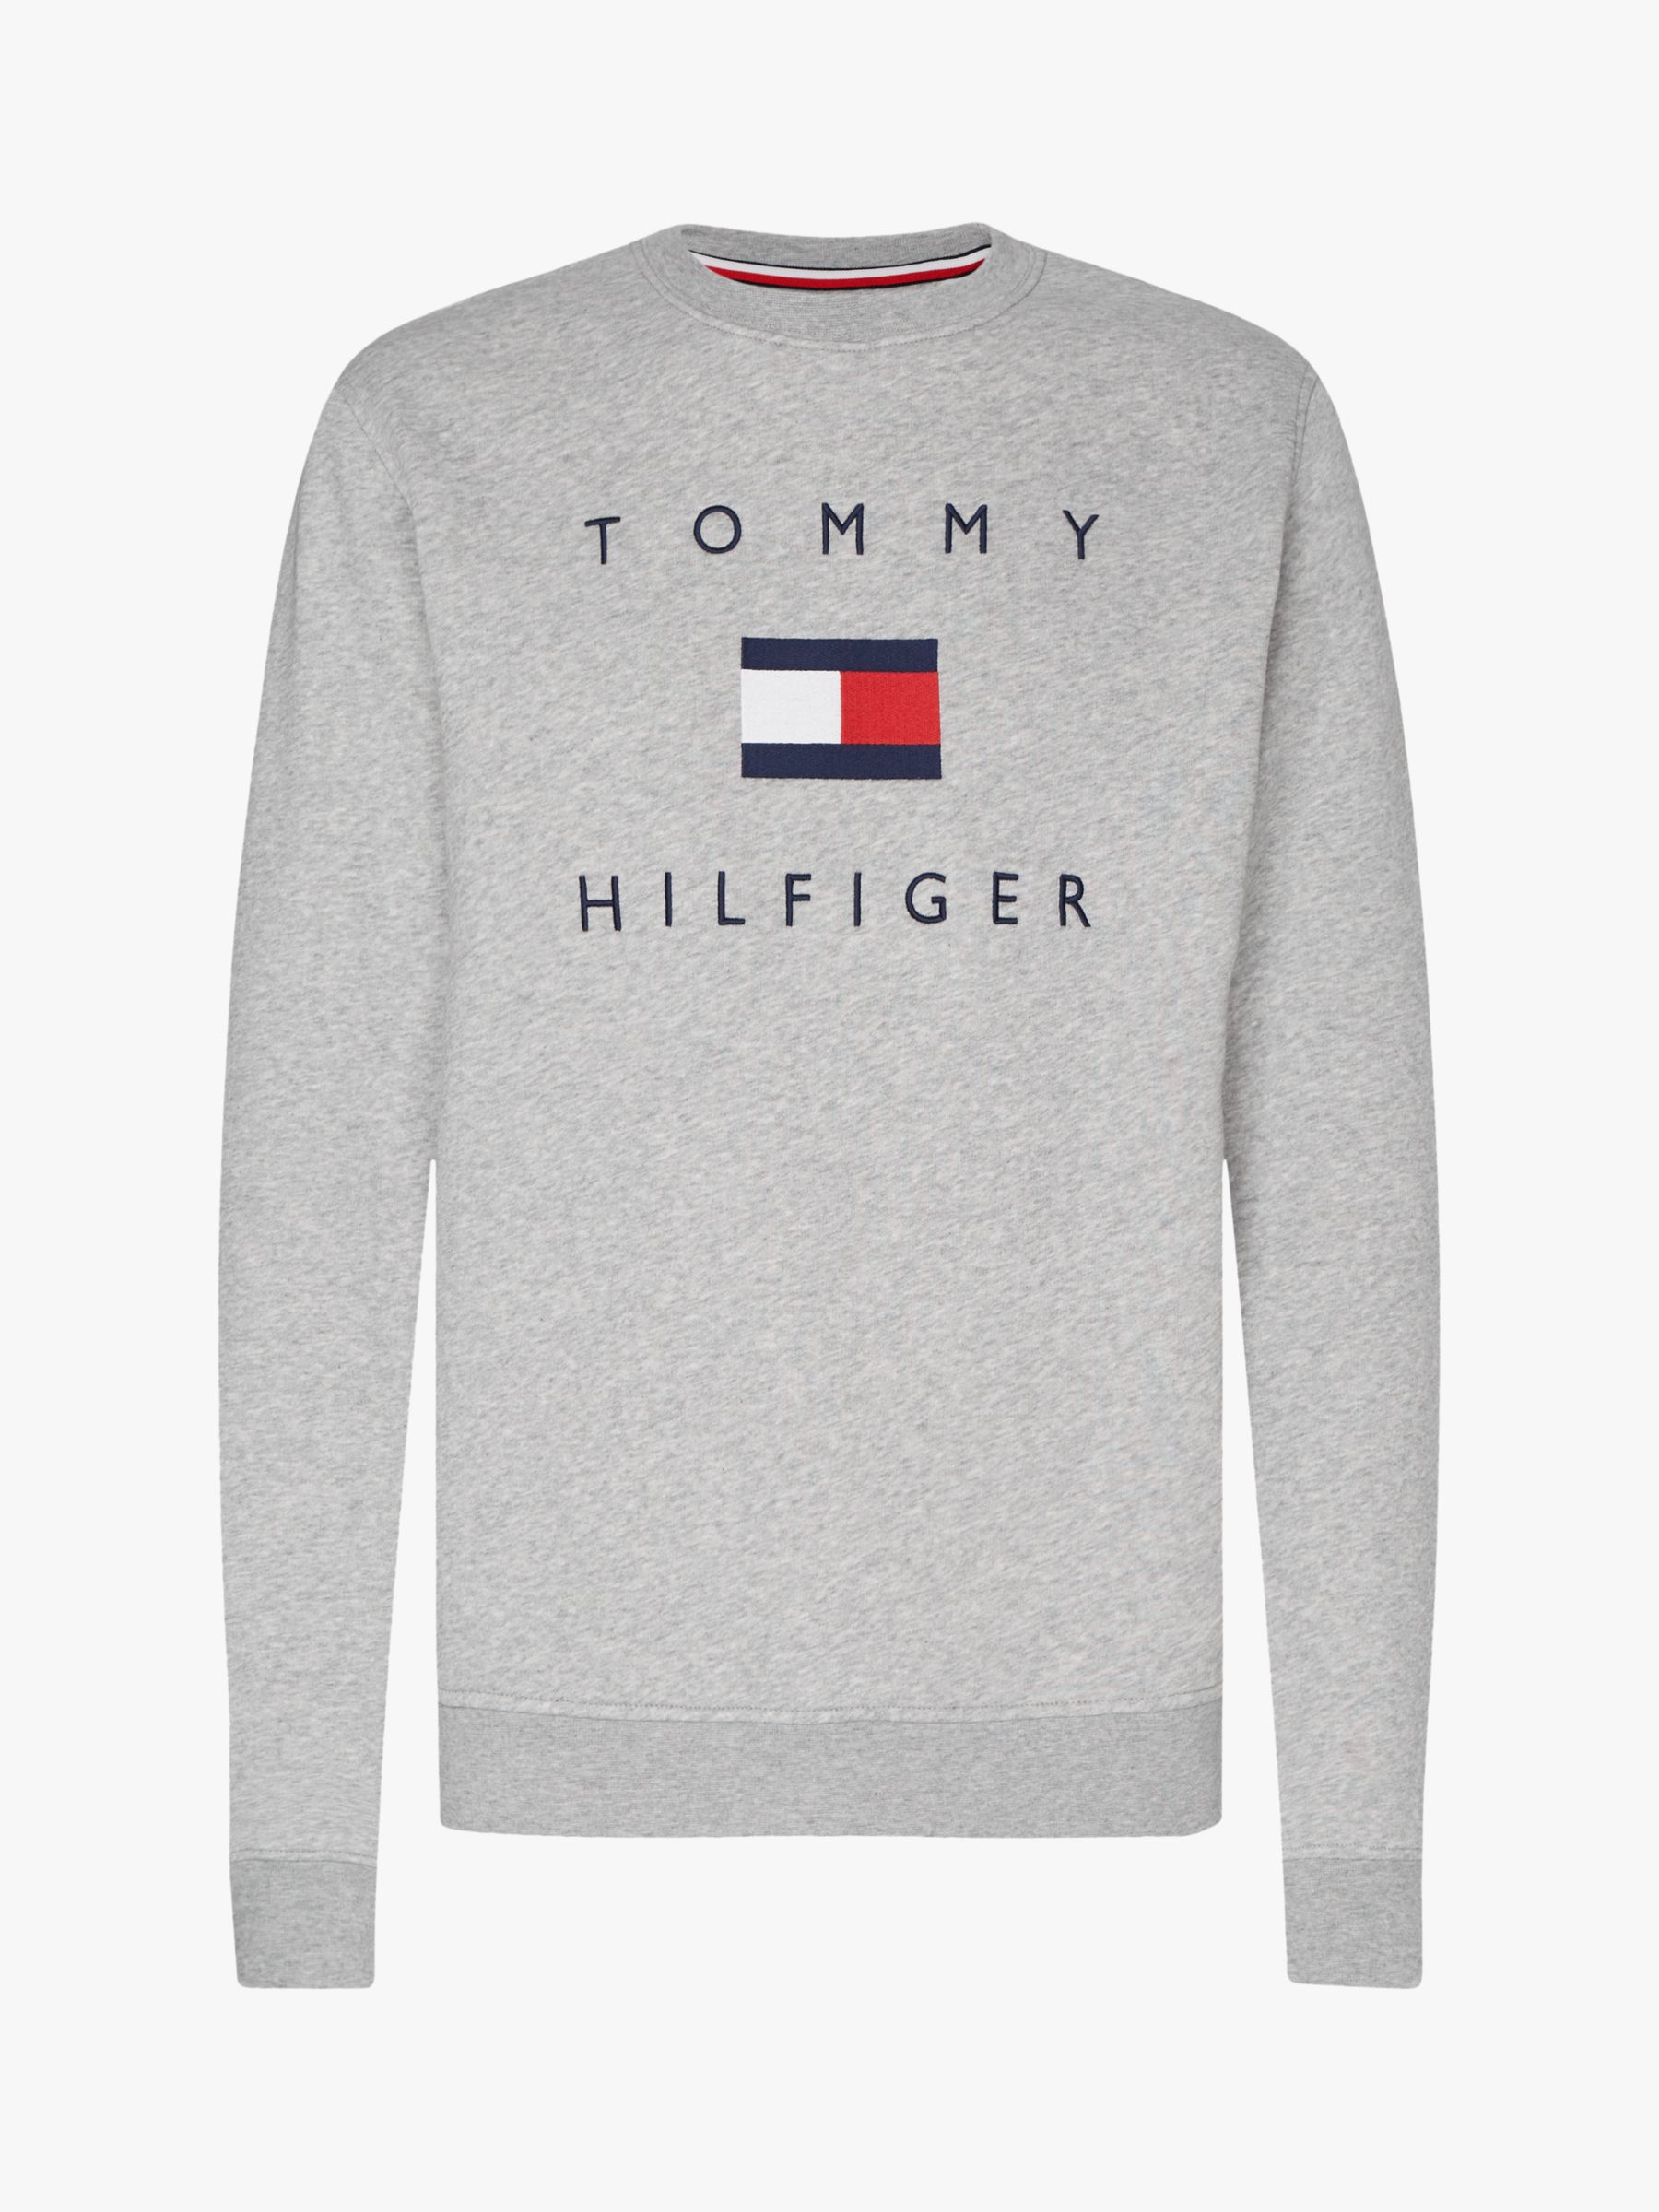 tommy hilfiger original try track sweatshirt